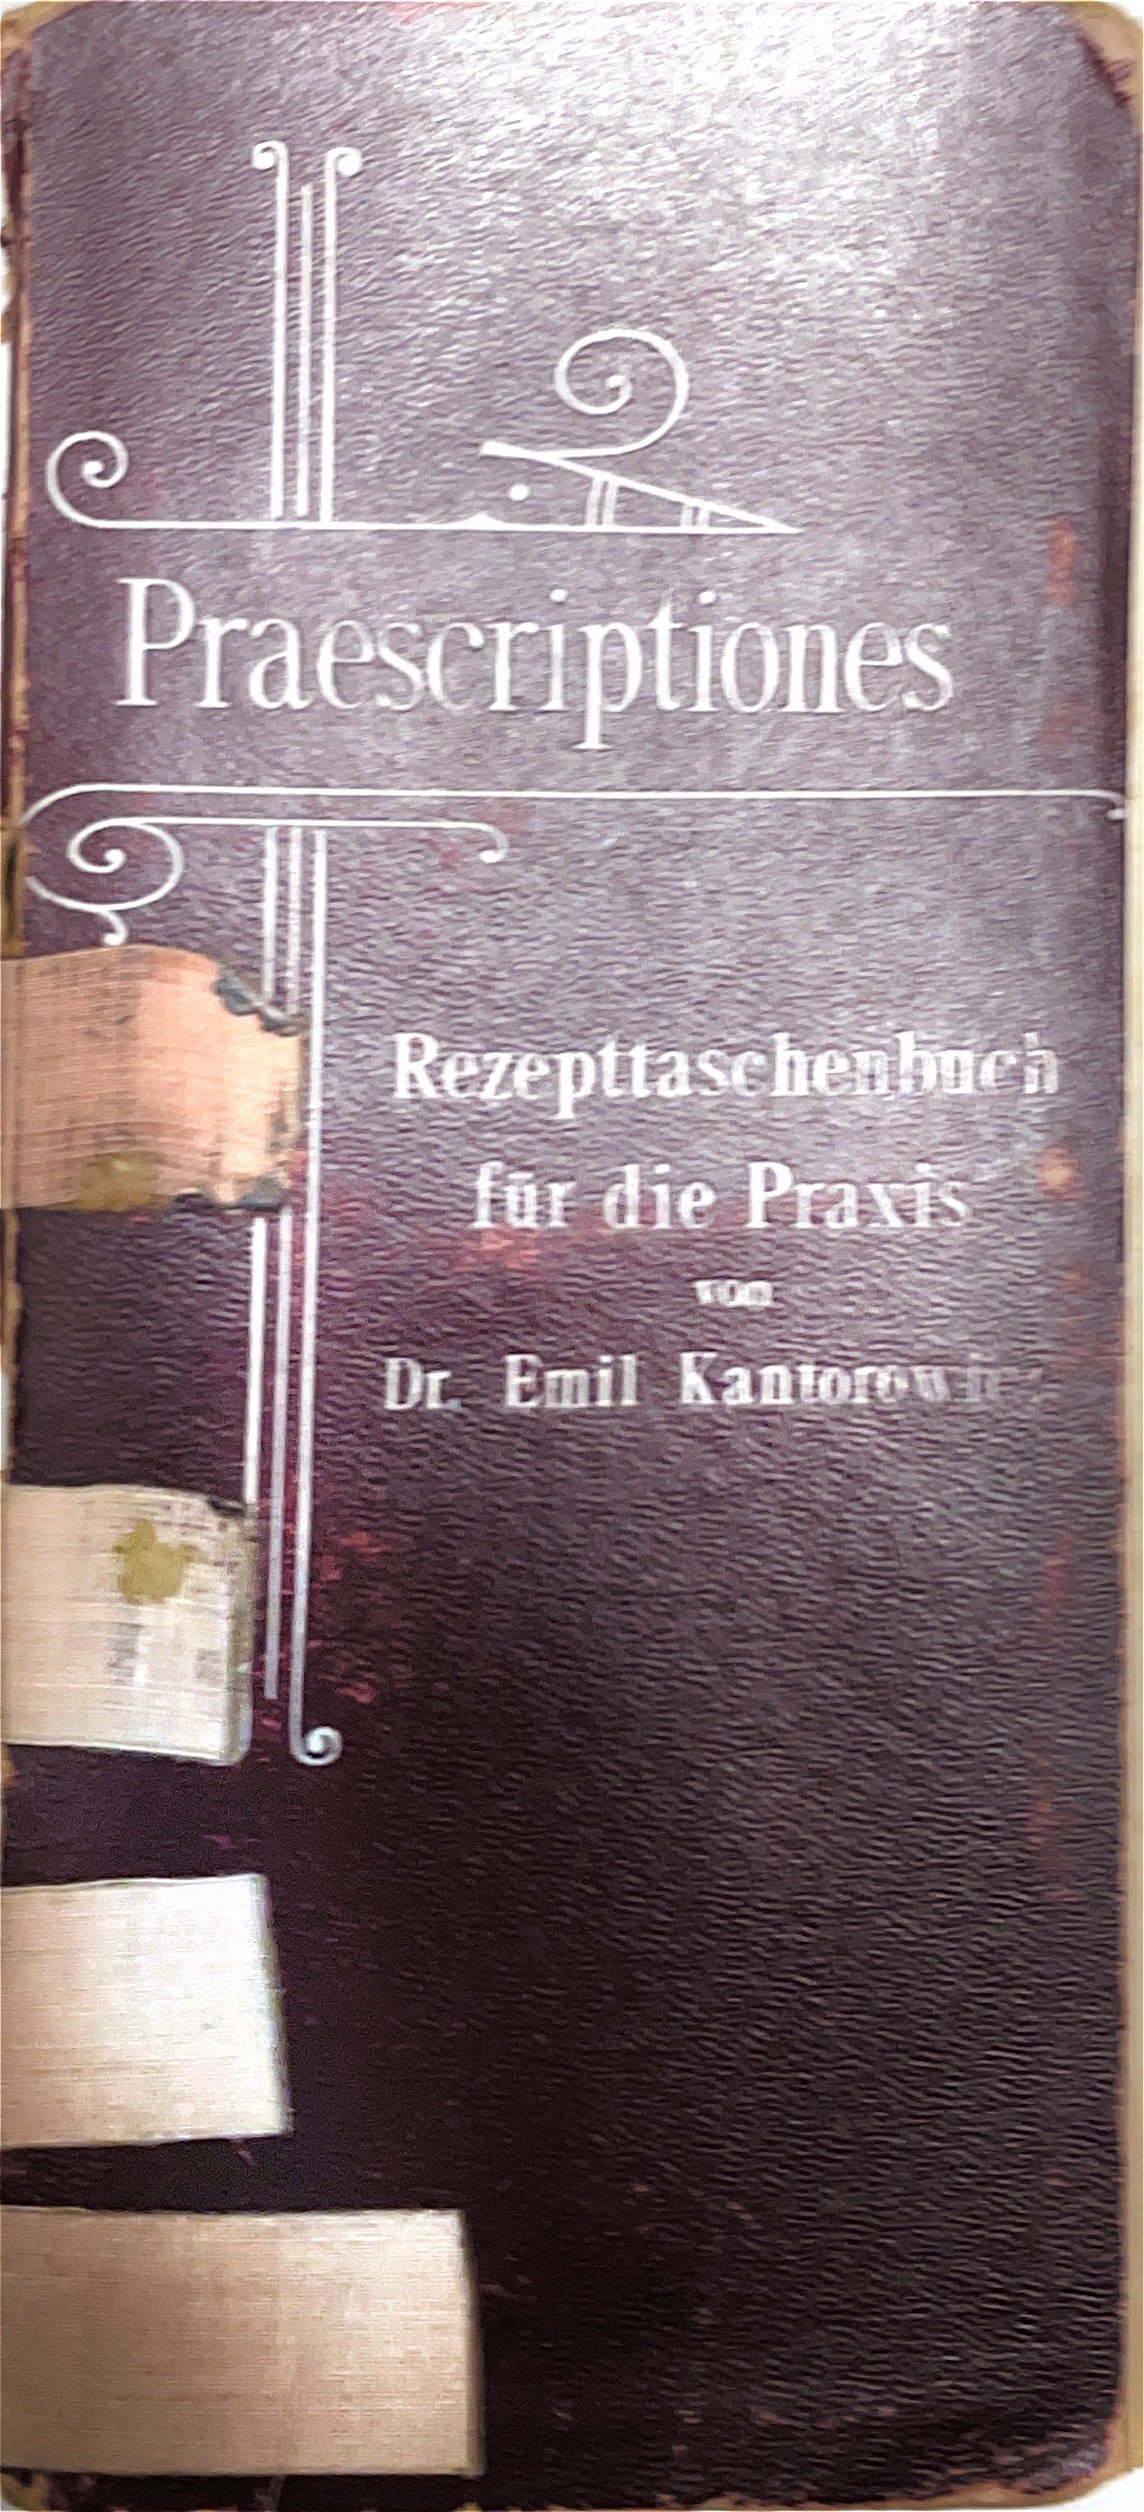 Praescriptiones Rezepttaschenbuch für die Praxis (Krankenhausmuseum Bielefeld e.V. CC BY-NC-SA)